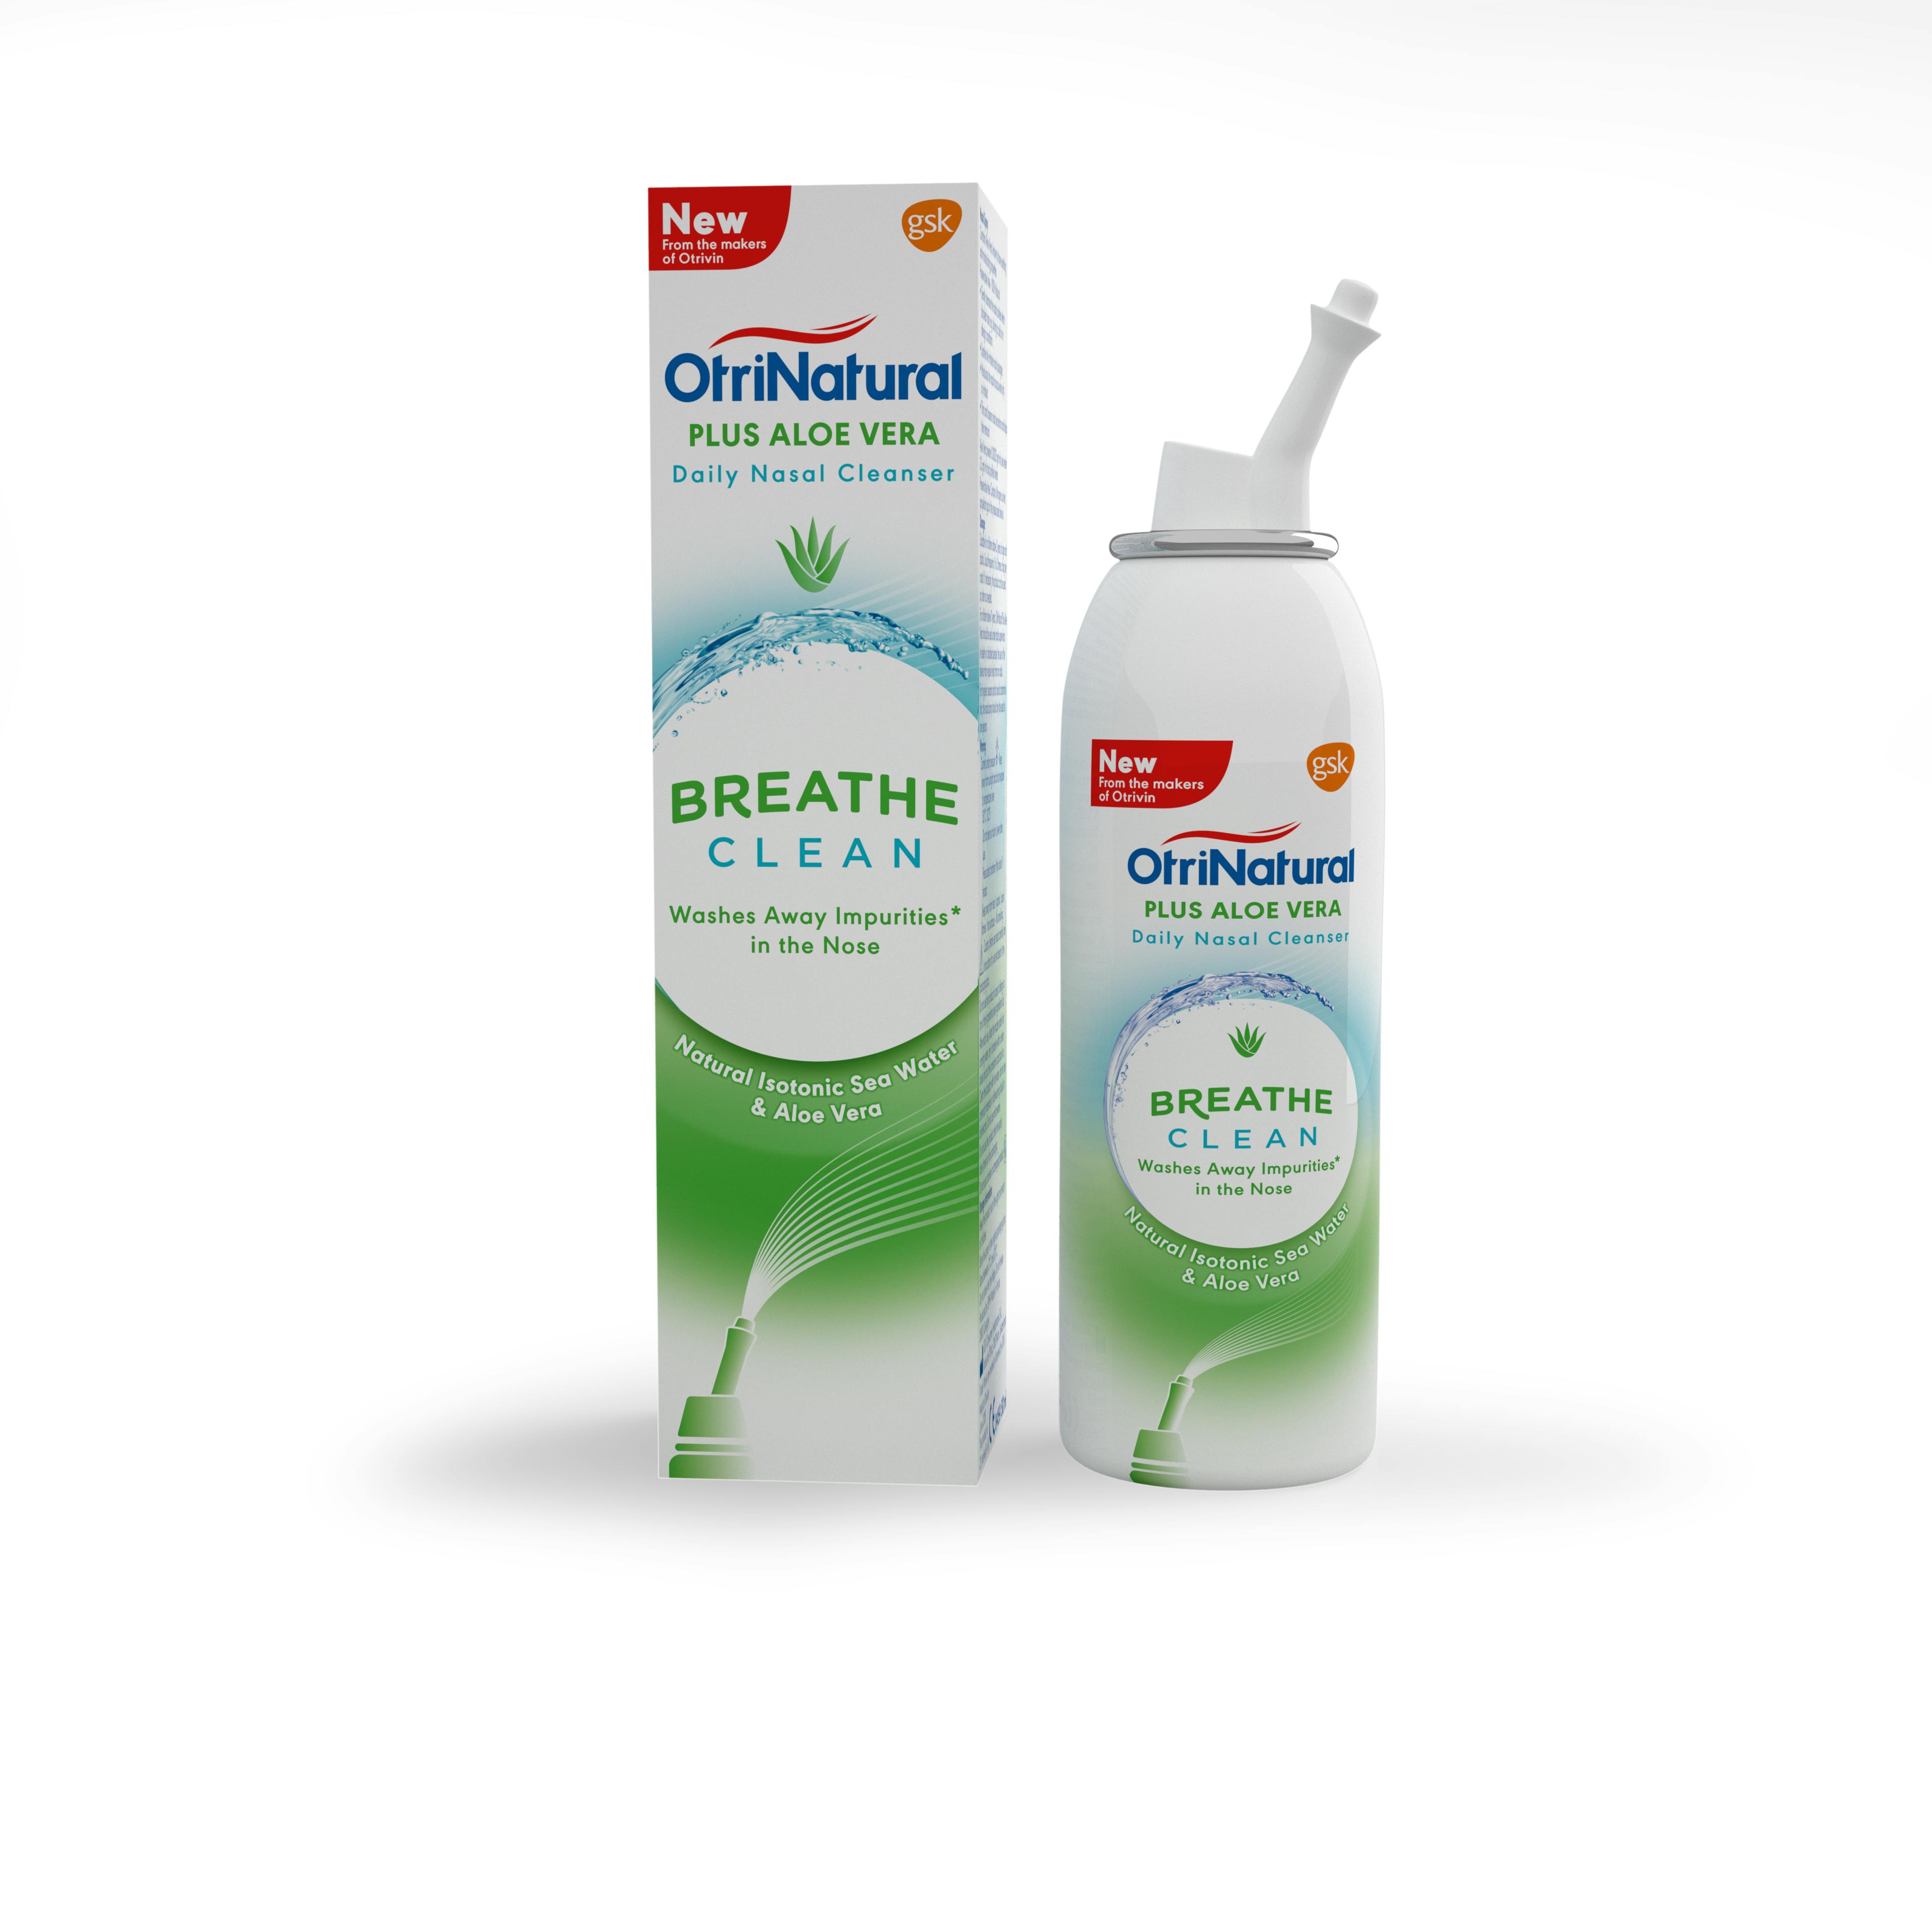 OtriNatural Plus Aloe Vera - Daily Nasal Cleanser